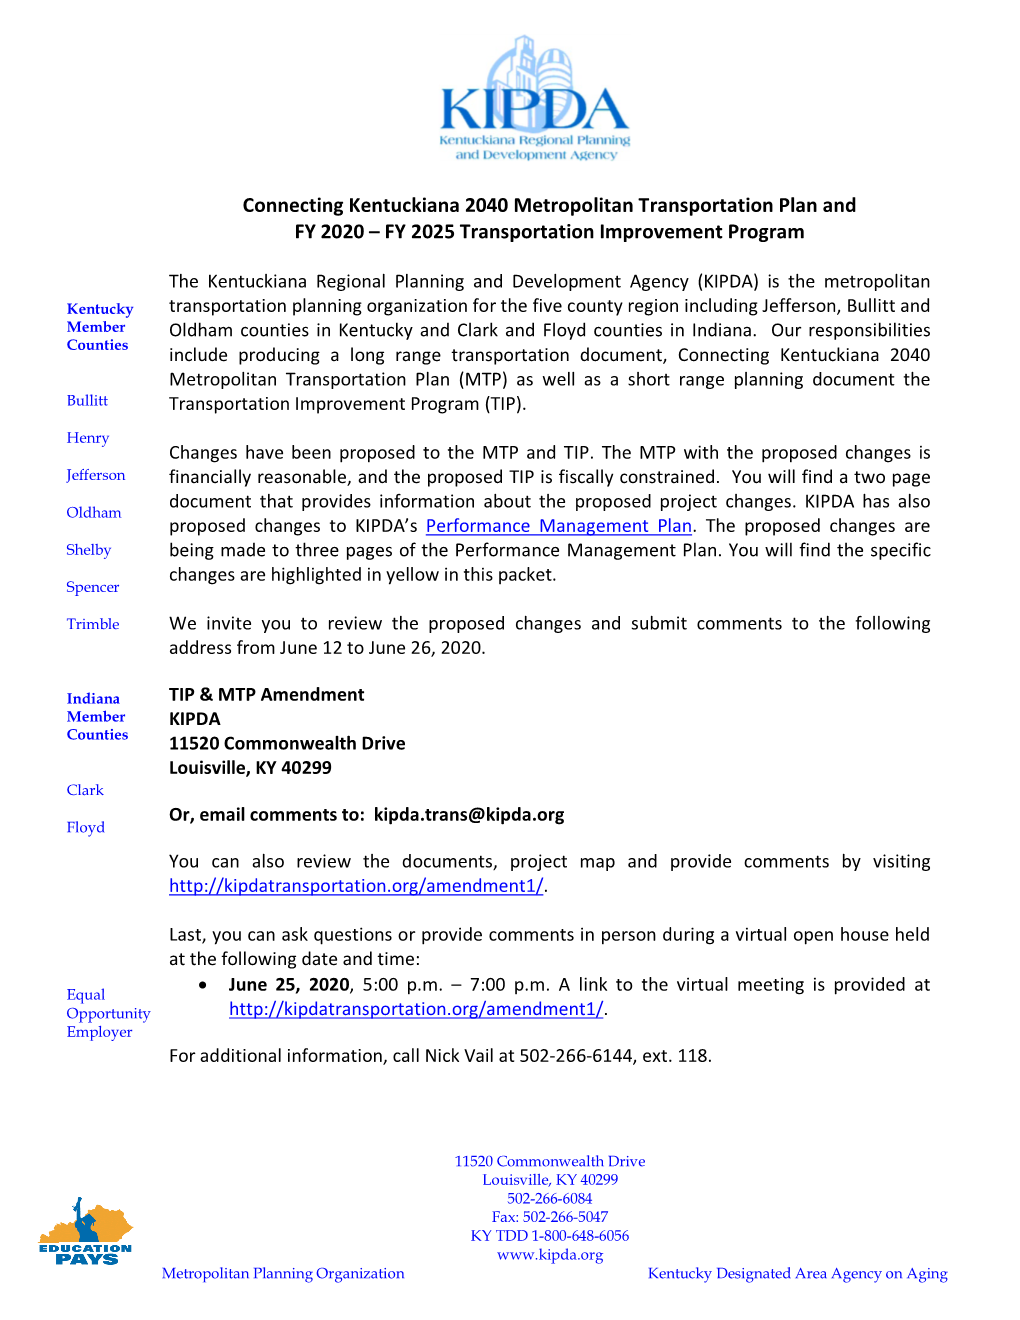 FY 2025 Transportation Improvement Program